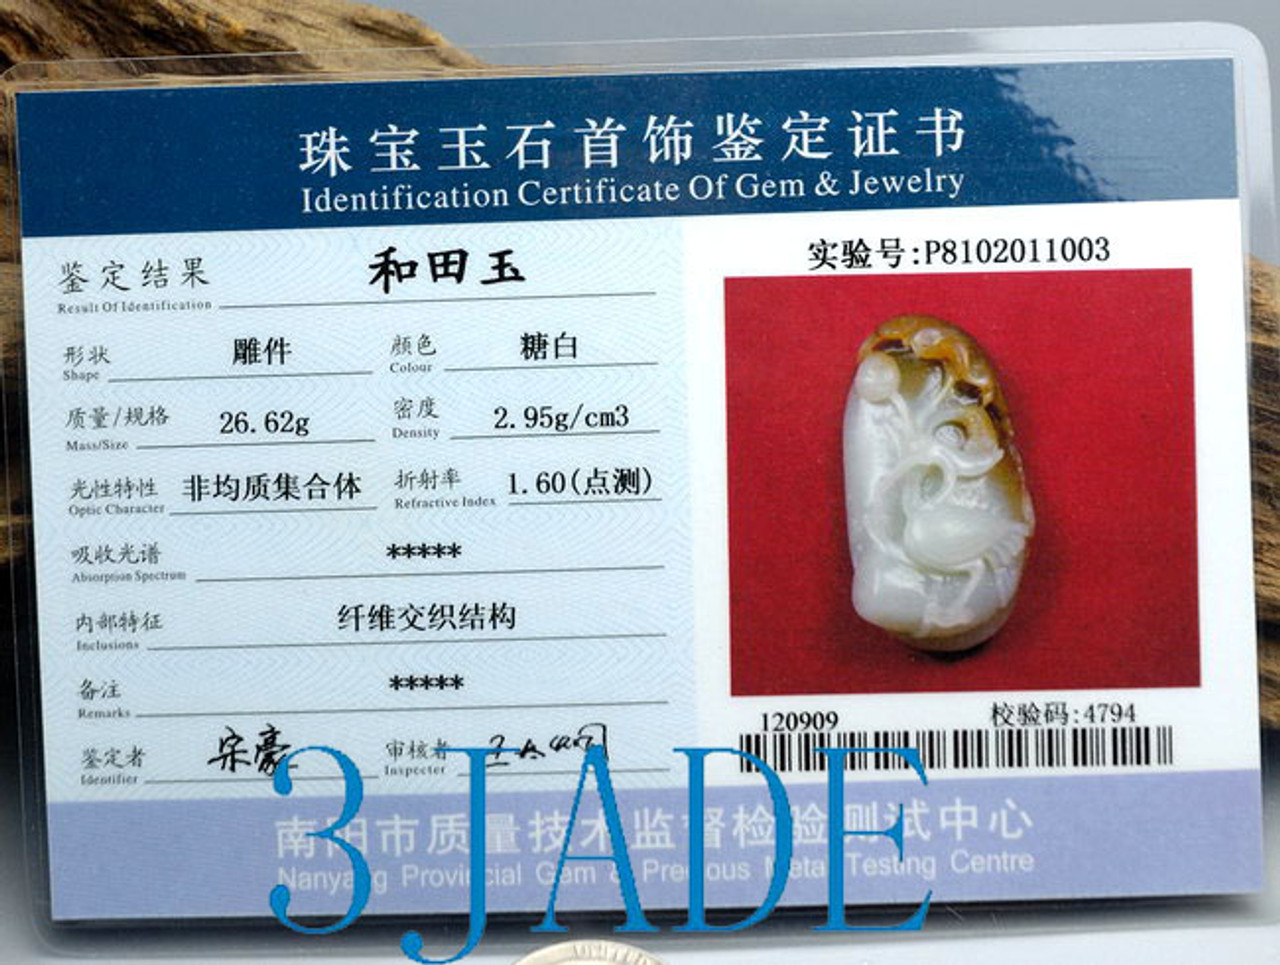 jade certificate